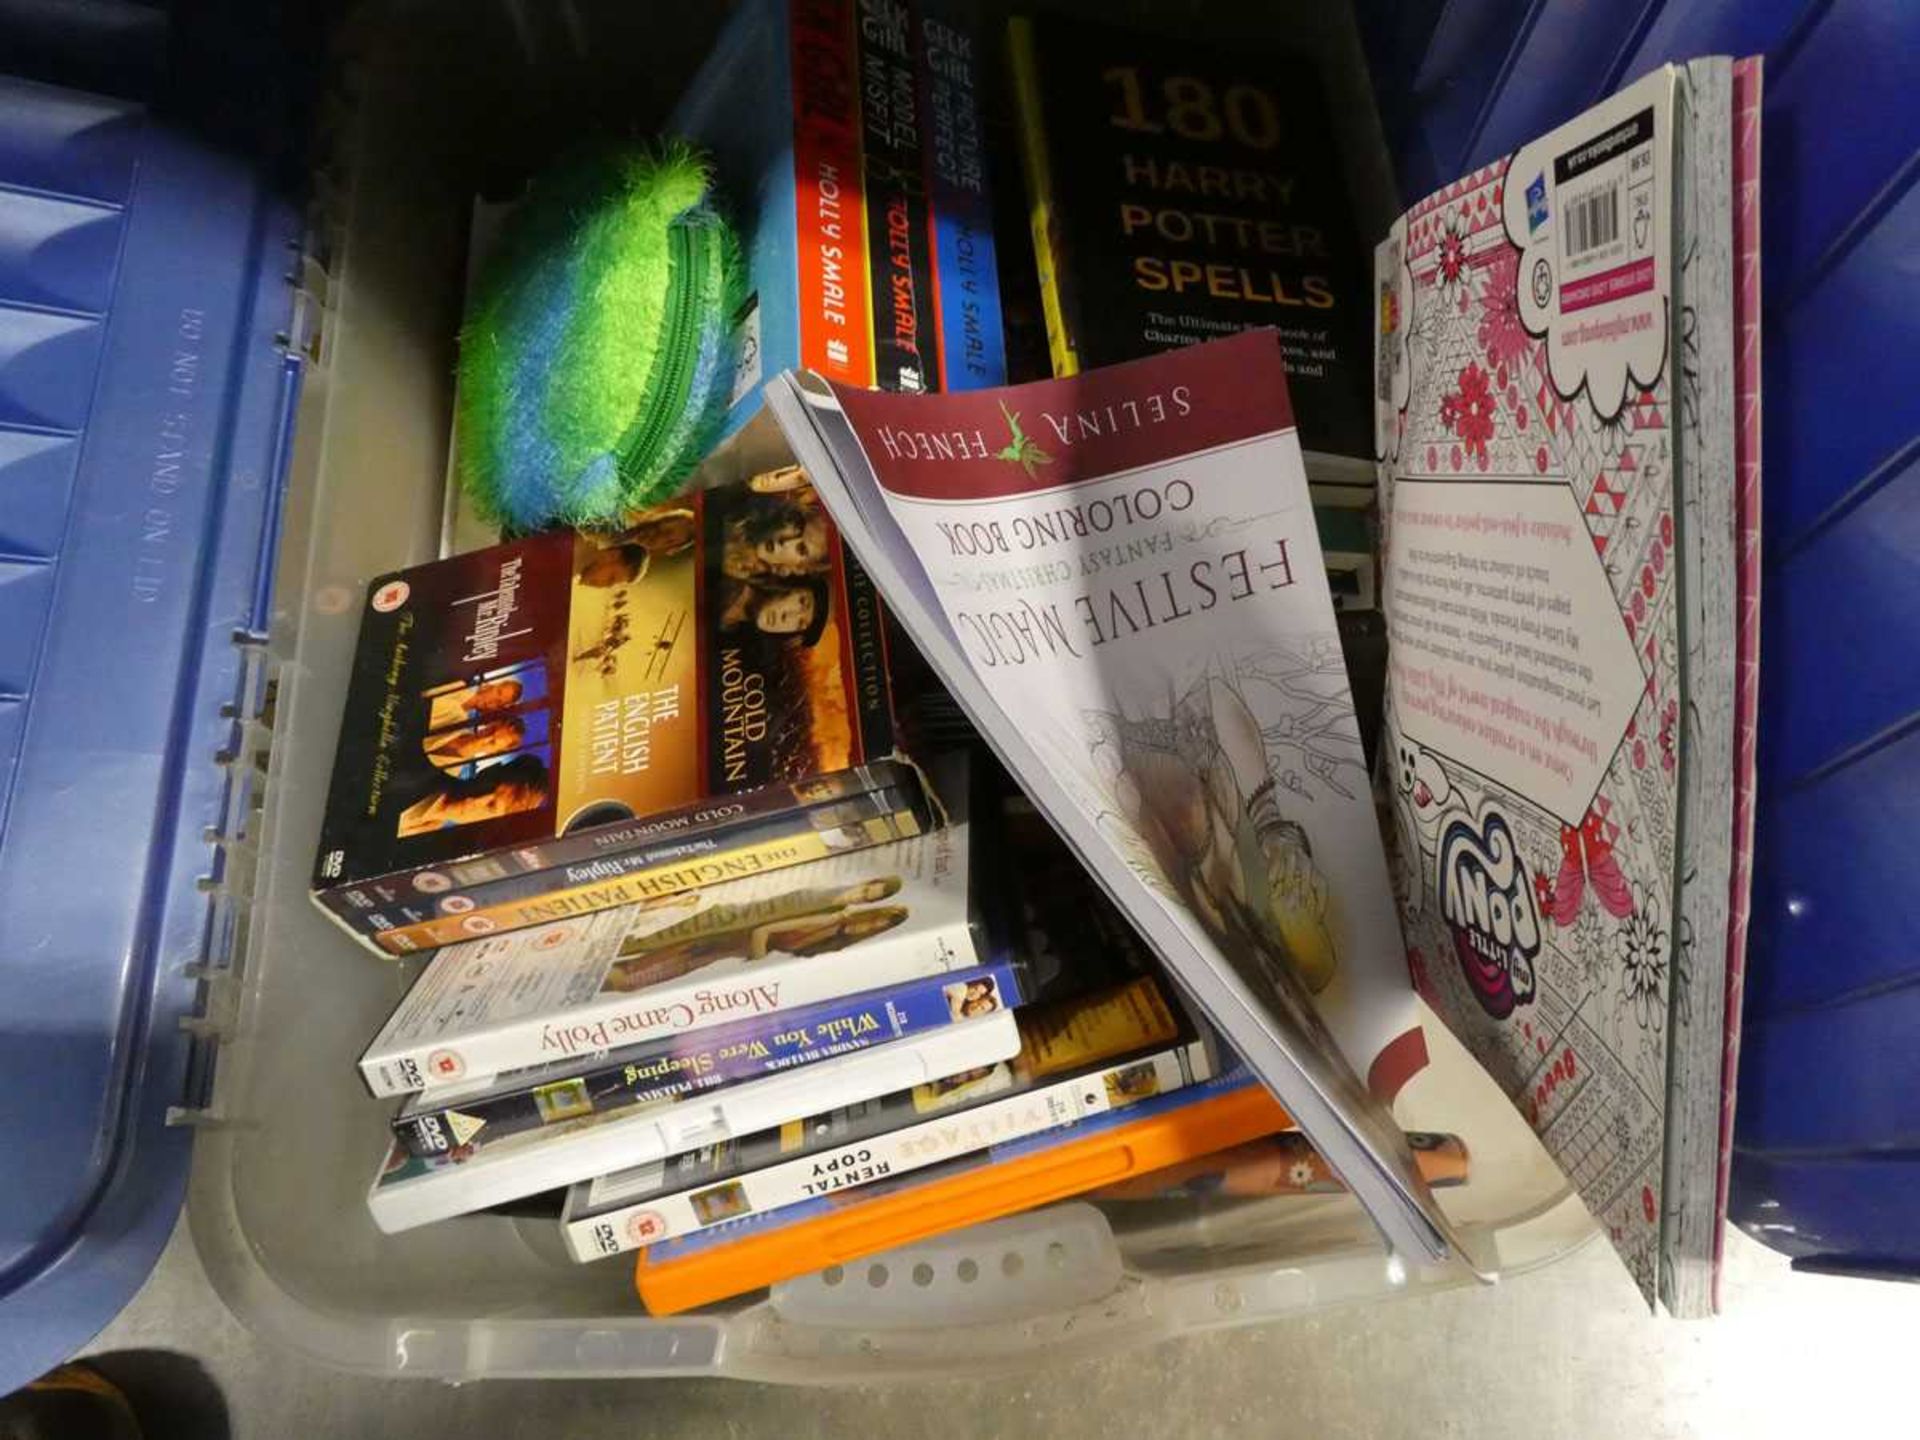 Box containing various books, DVD's etc